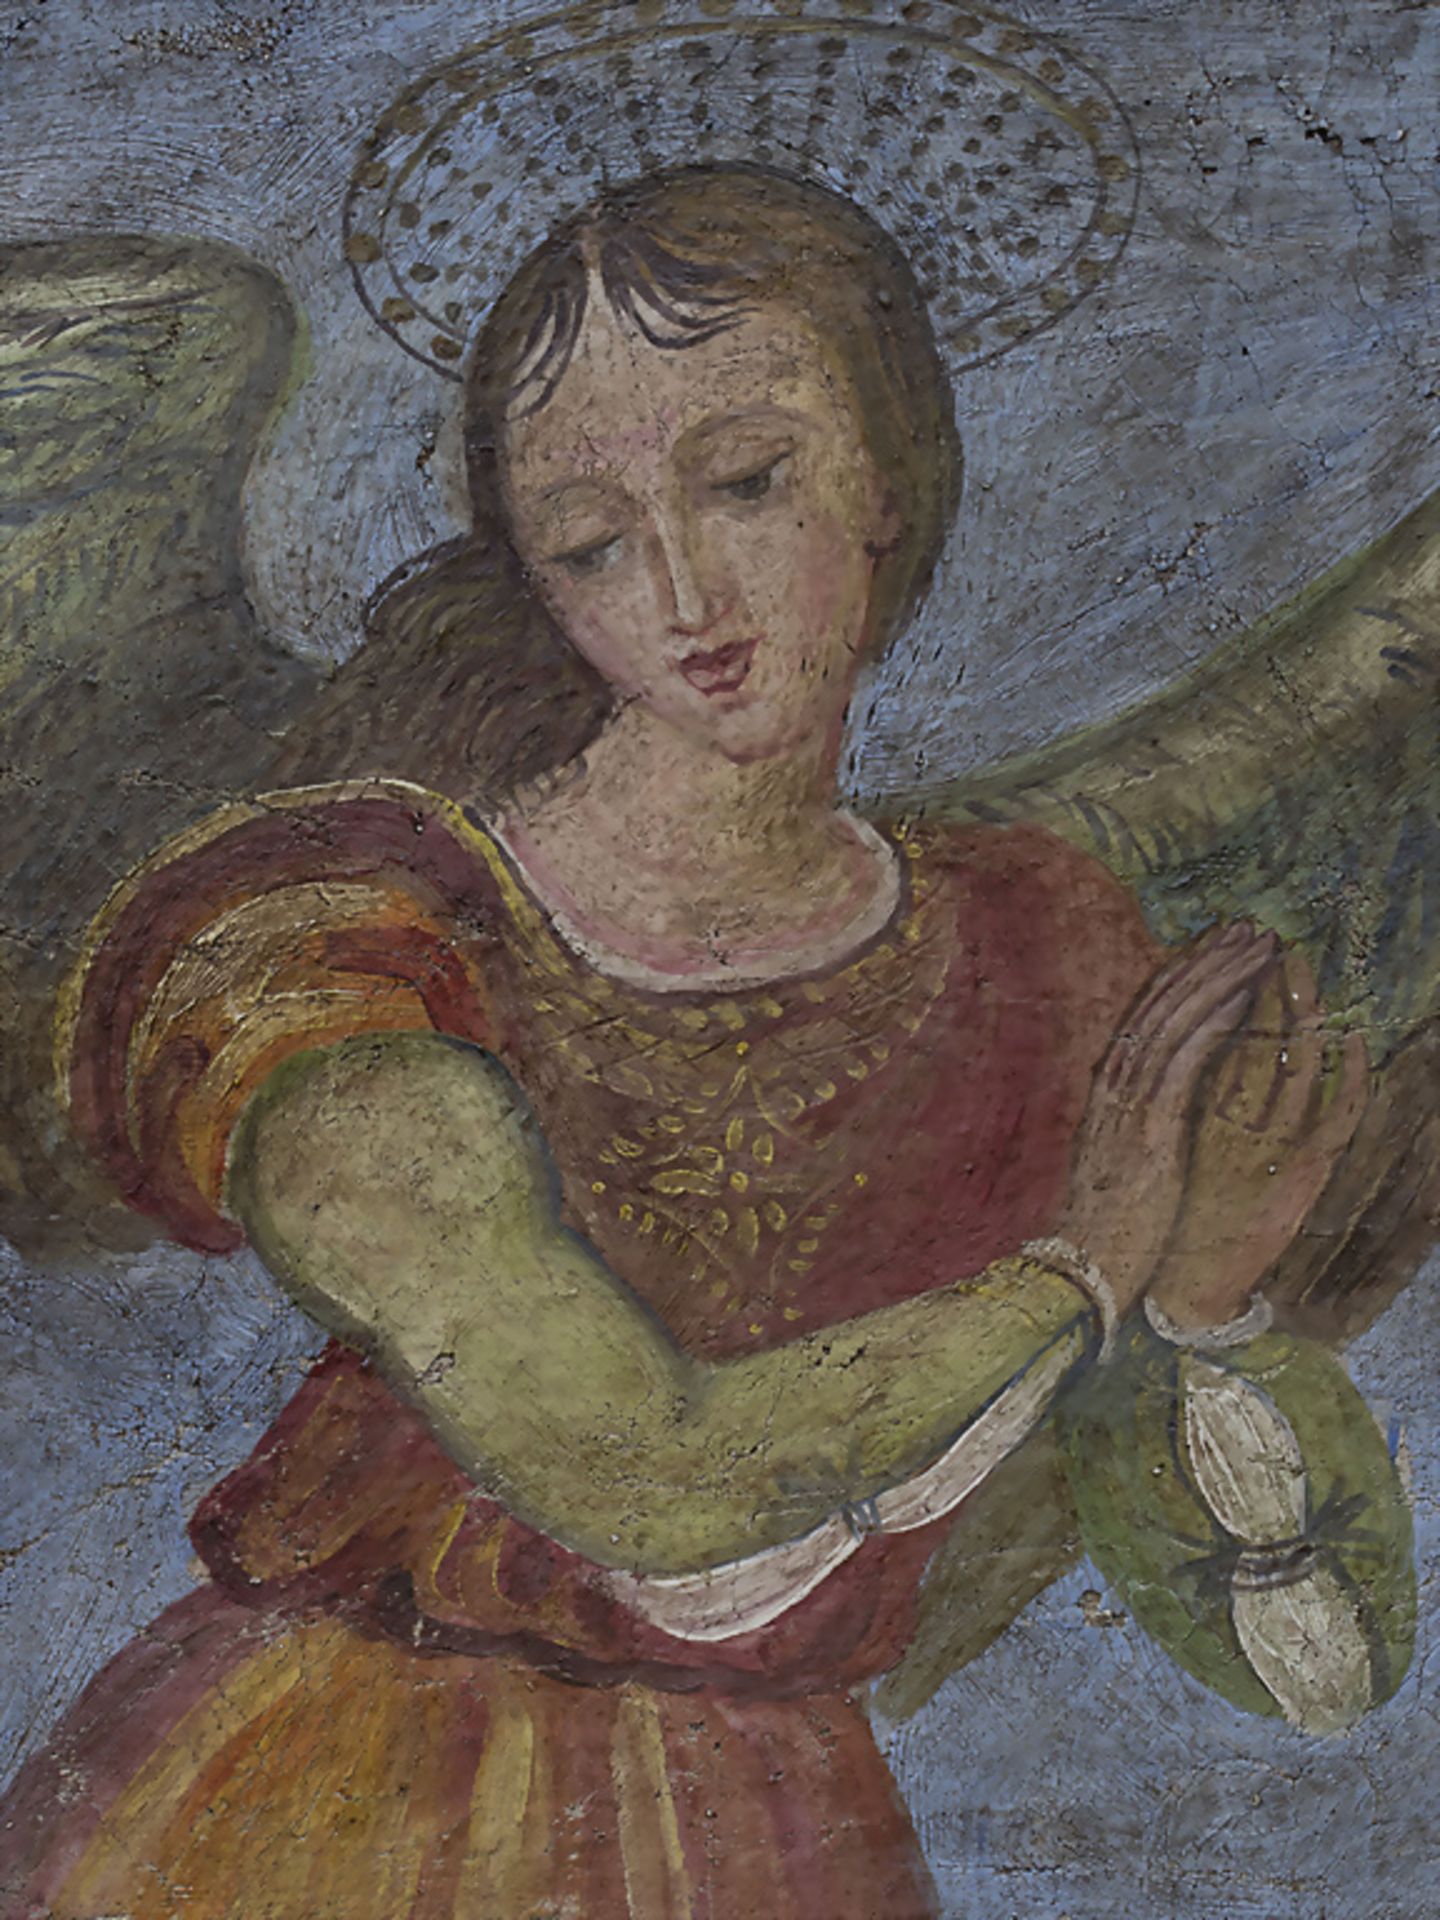 Unbekannter Künstler des 18./19. Jh., 'Porträt eines Engels' / A portrait of an angel' - Image 2 of 5